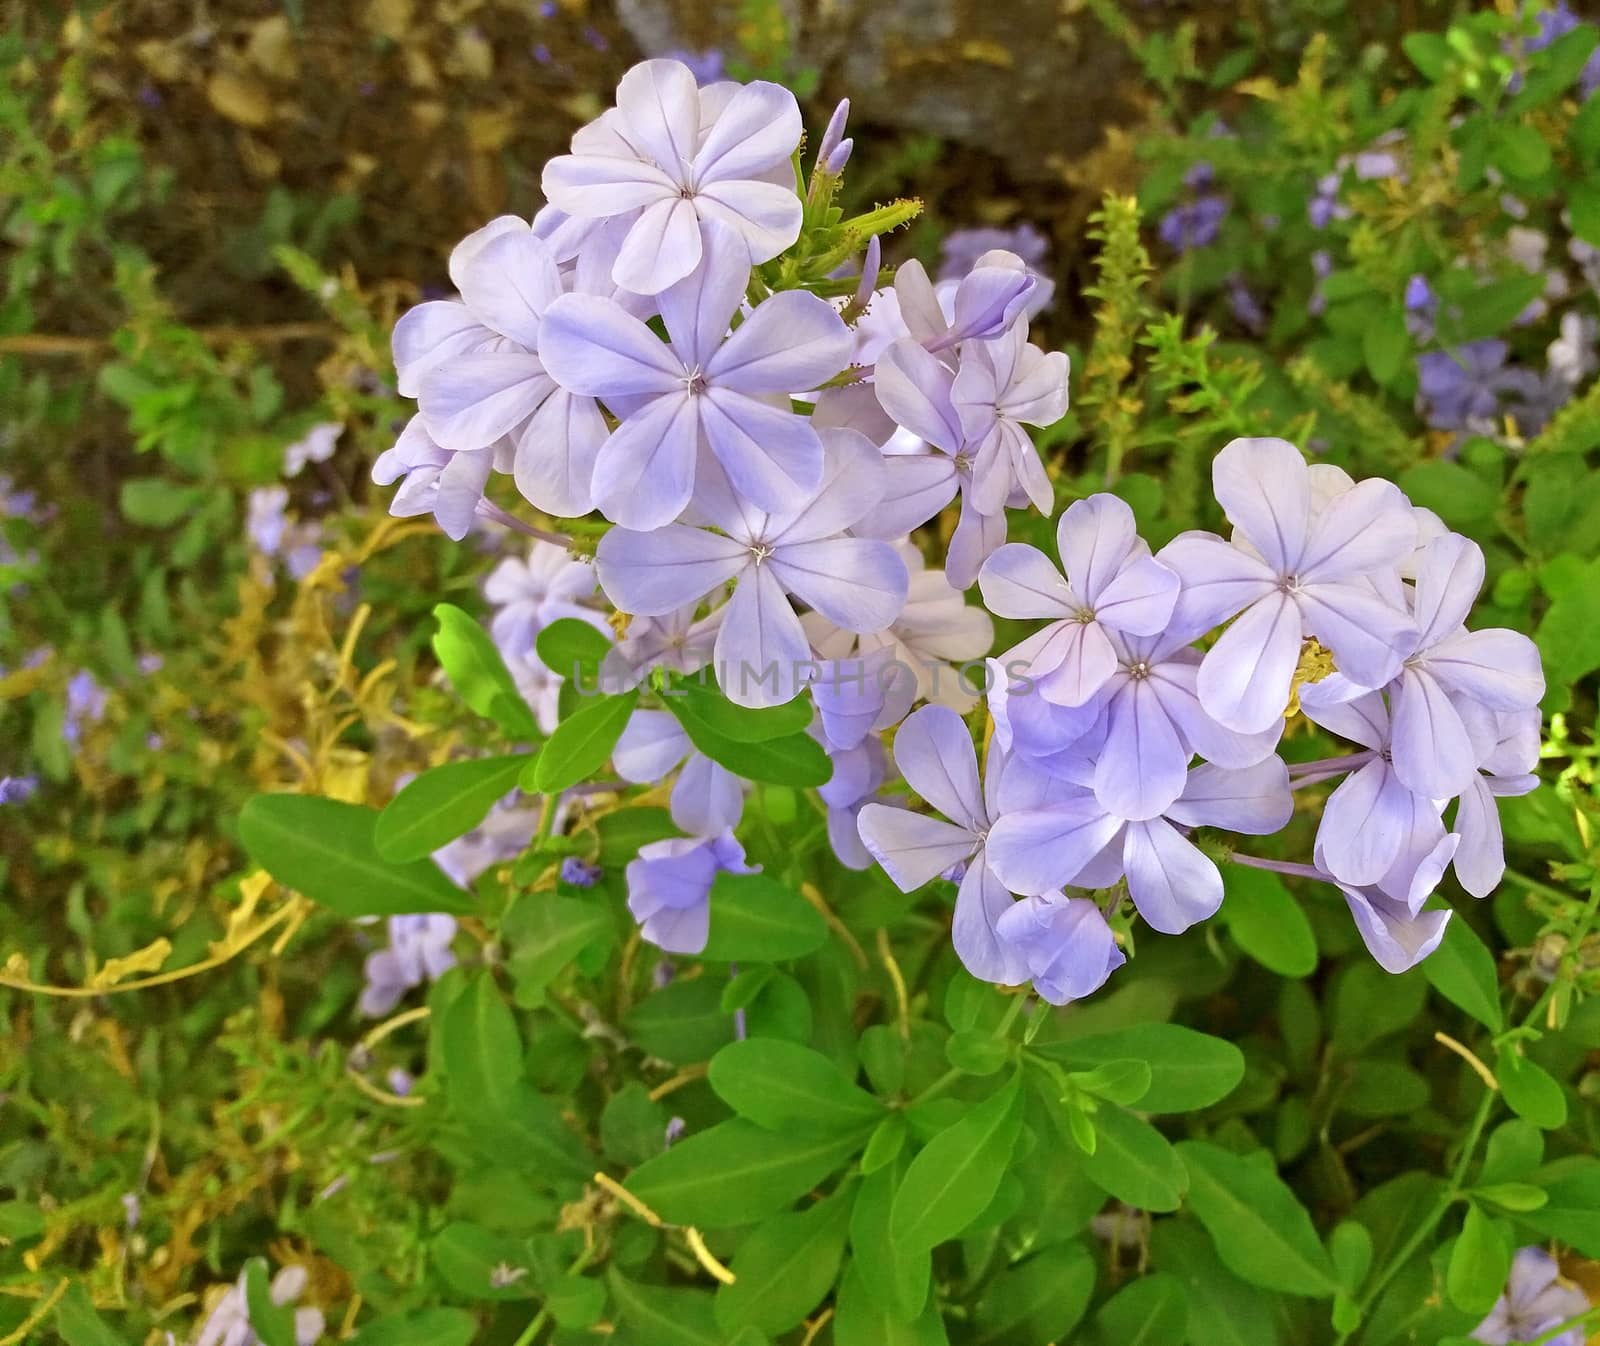 Beautiful purple flowers growing in the garden by Mindru